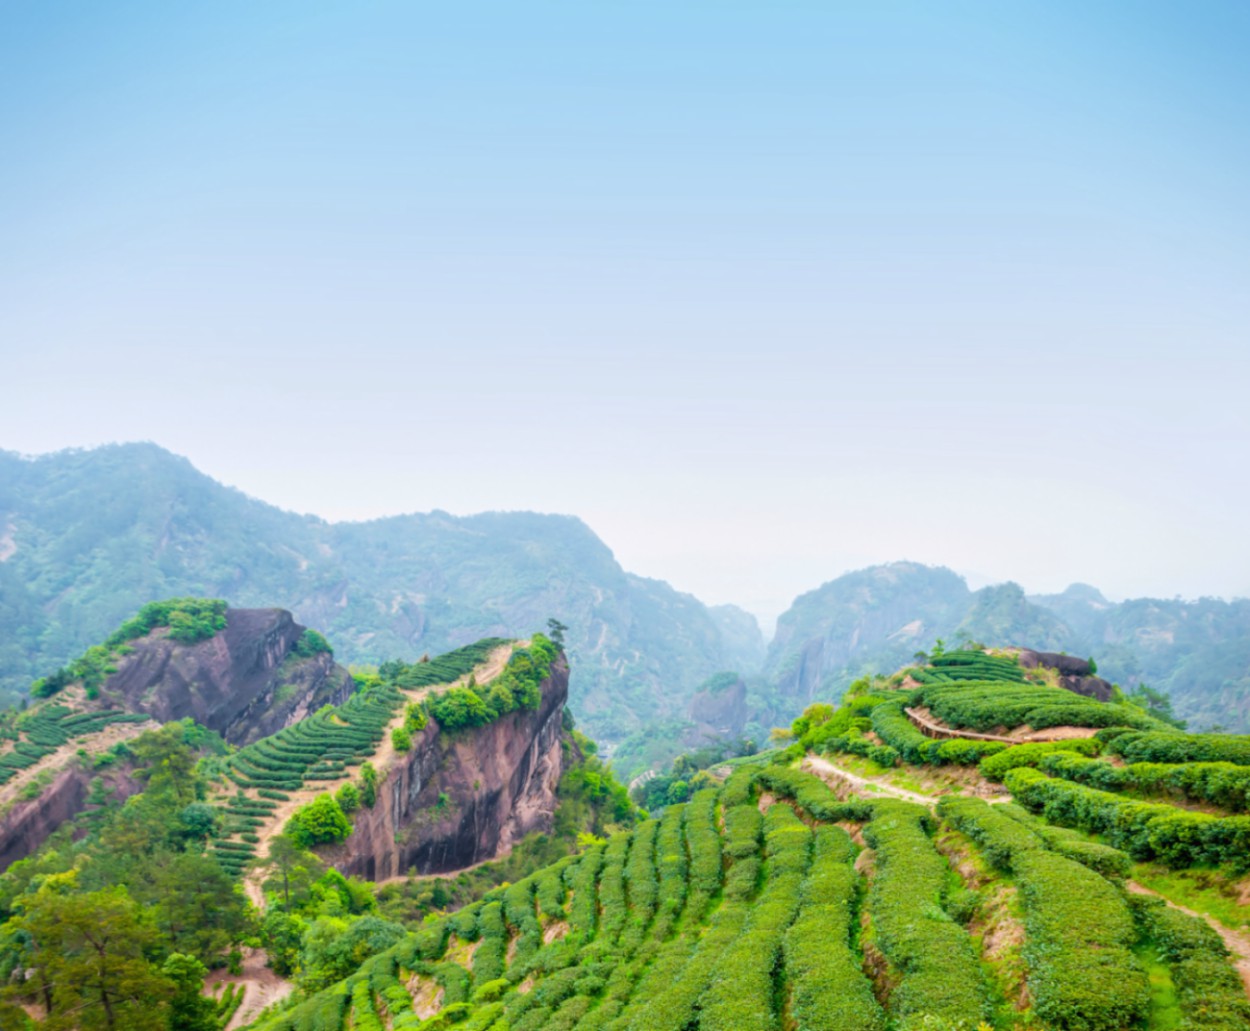 The visually stunning Wuyi Mountains